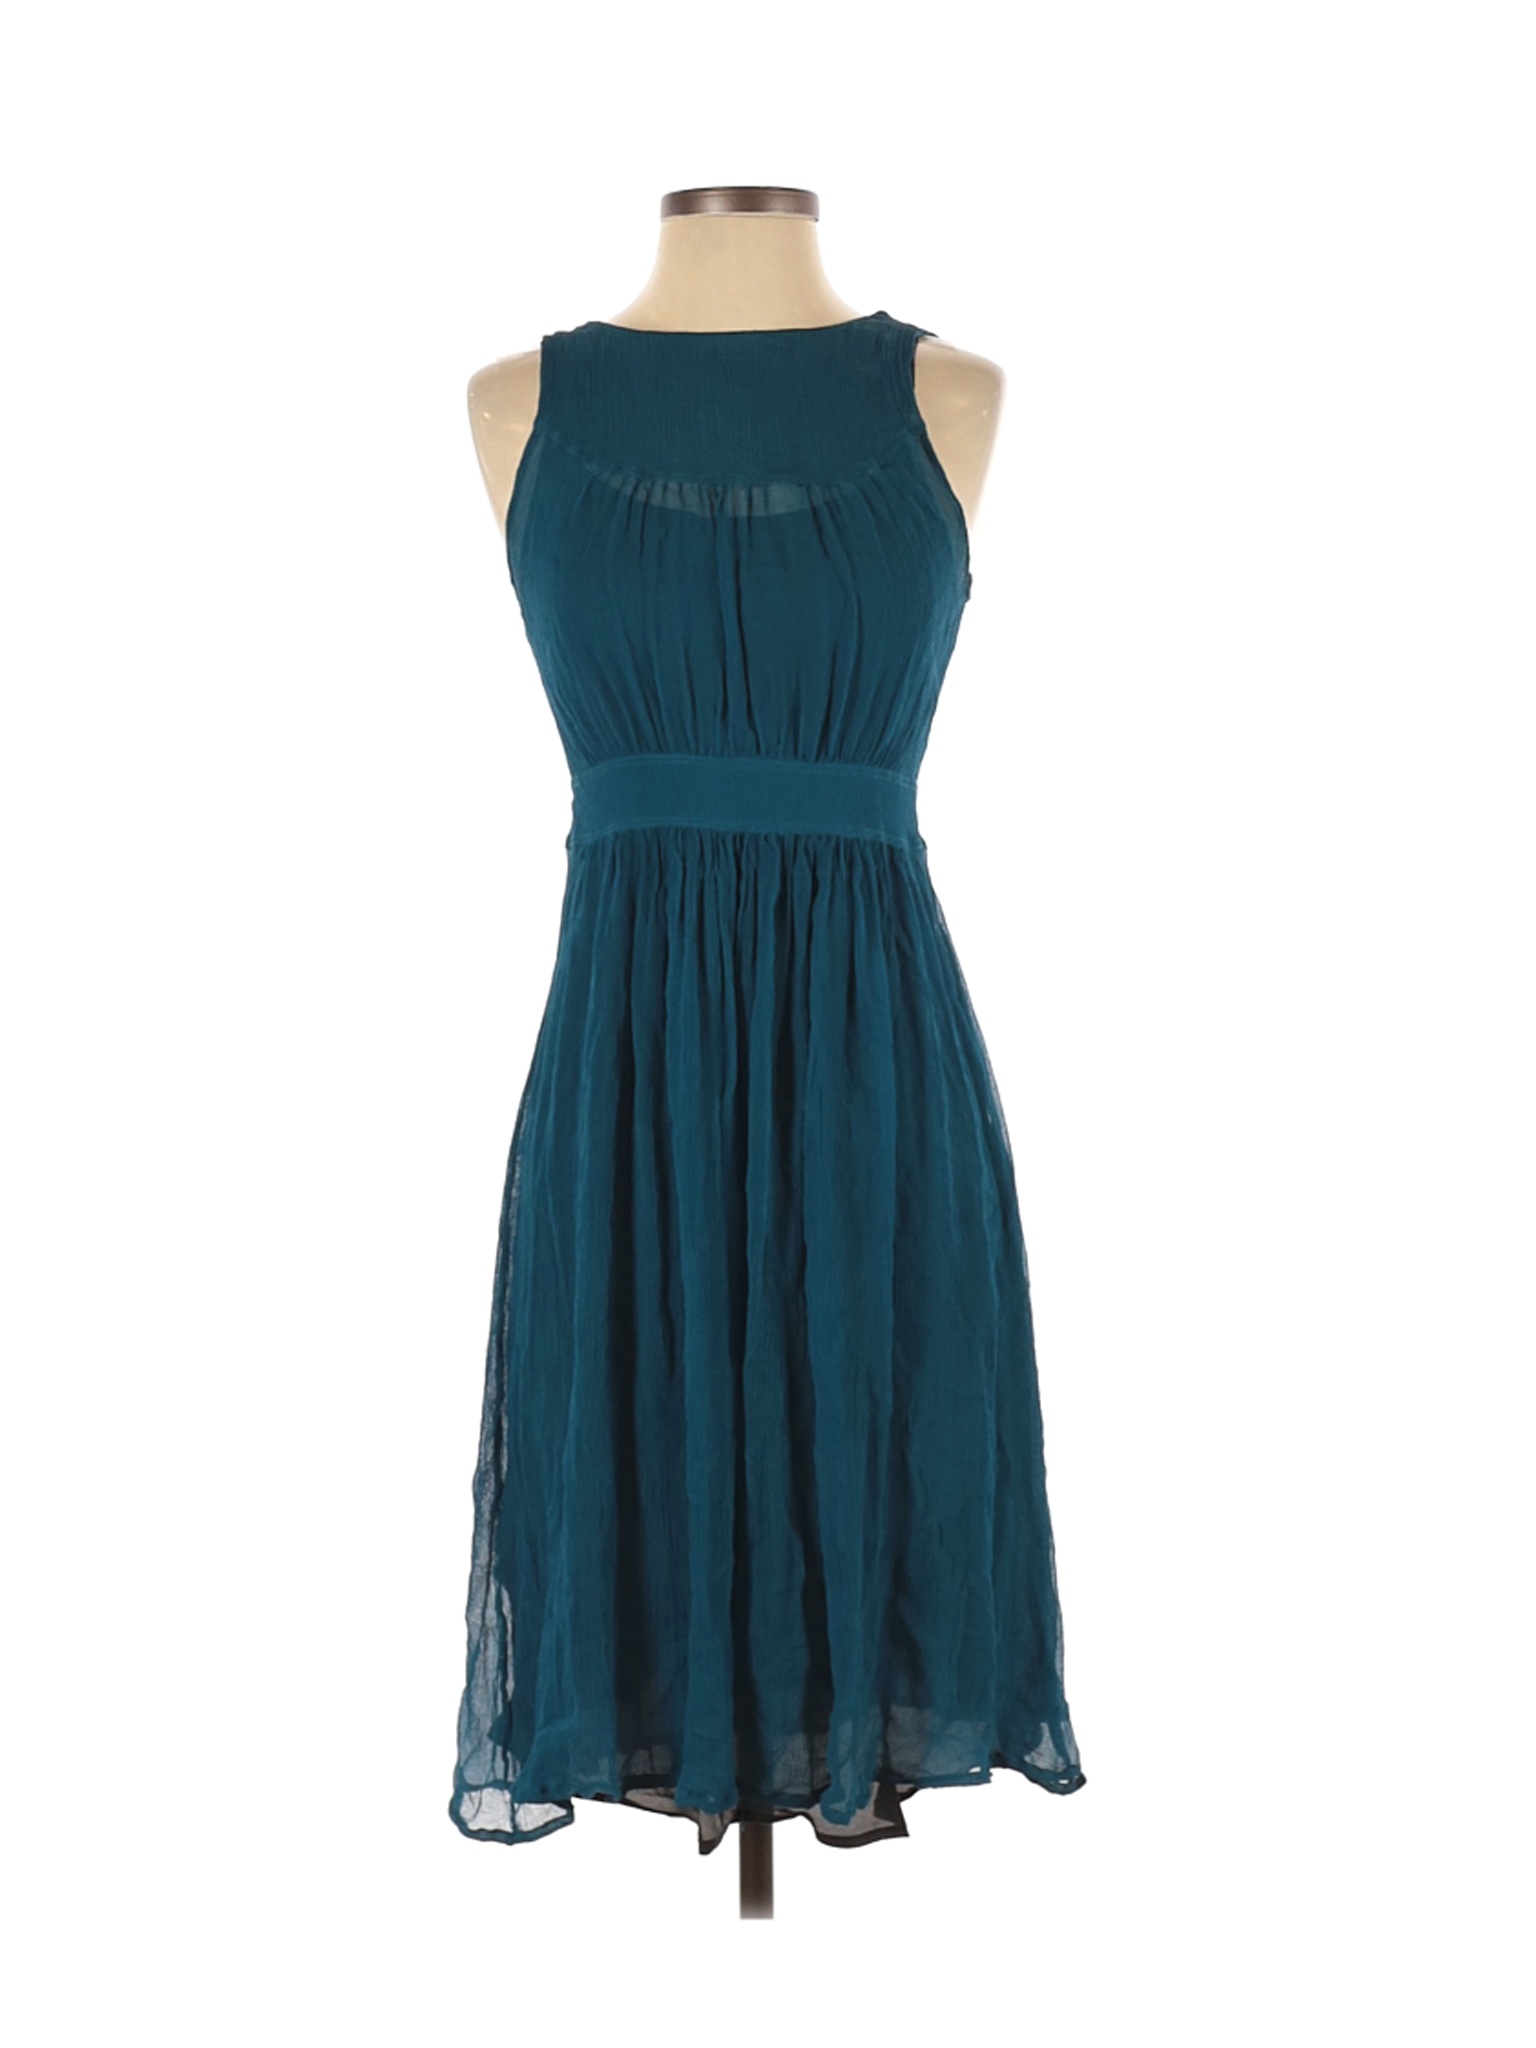 Gorman Women Green Casual Dress S | eBay